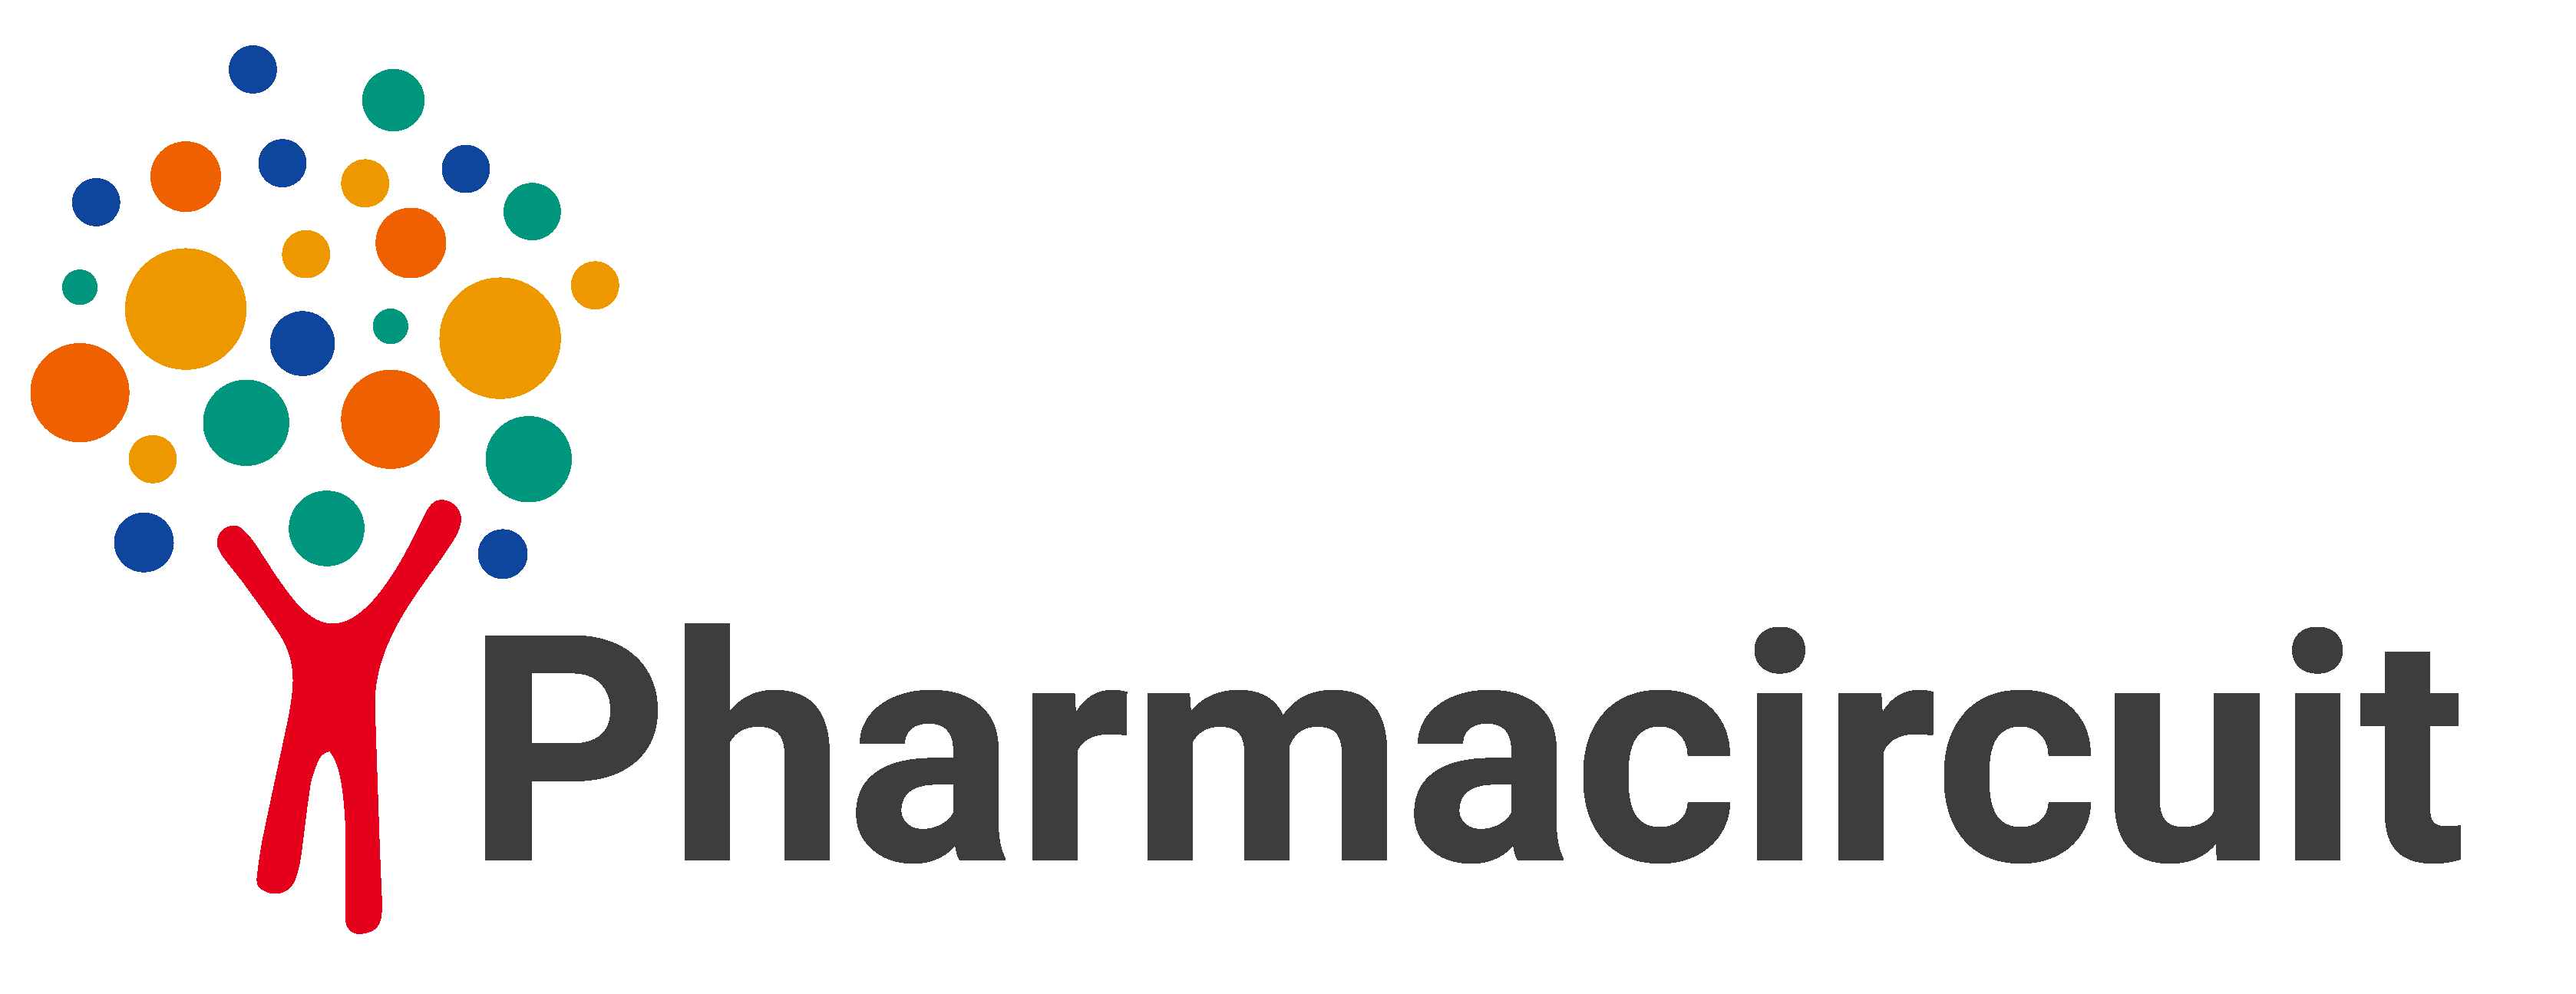 Pharmacircuit